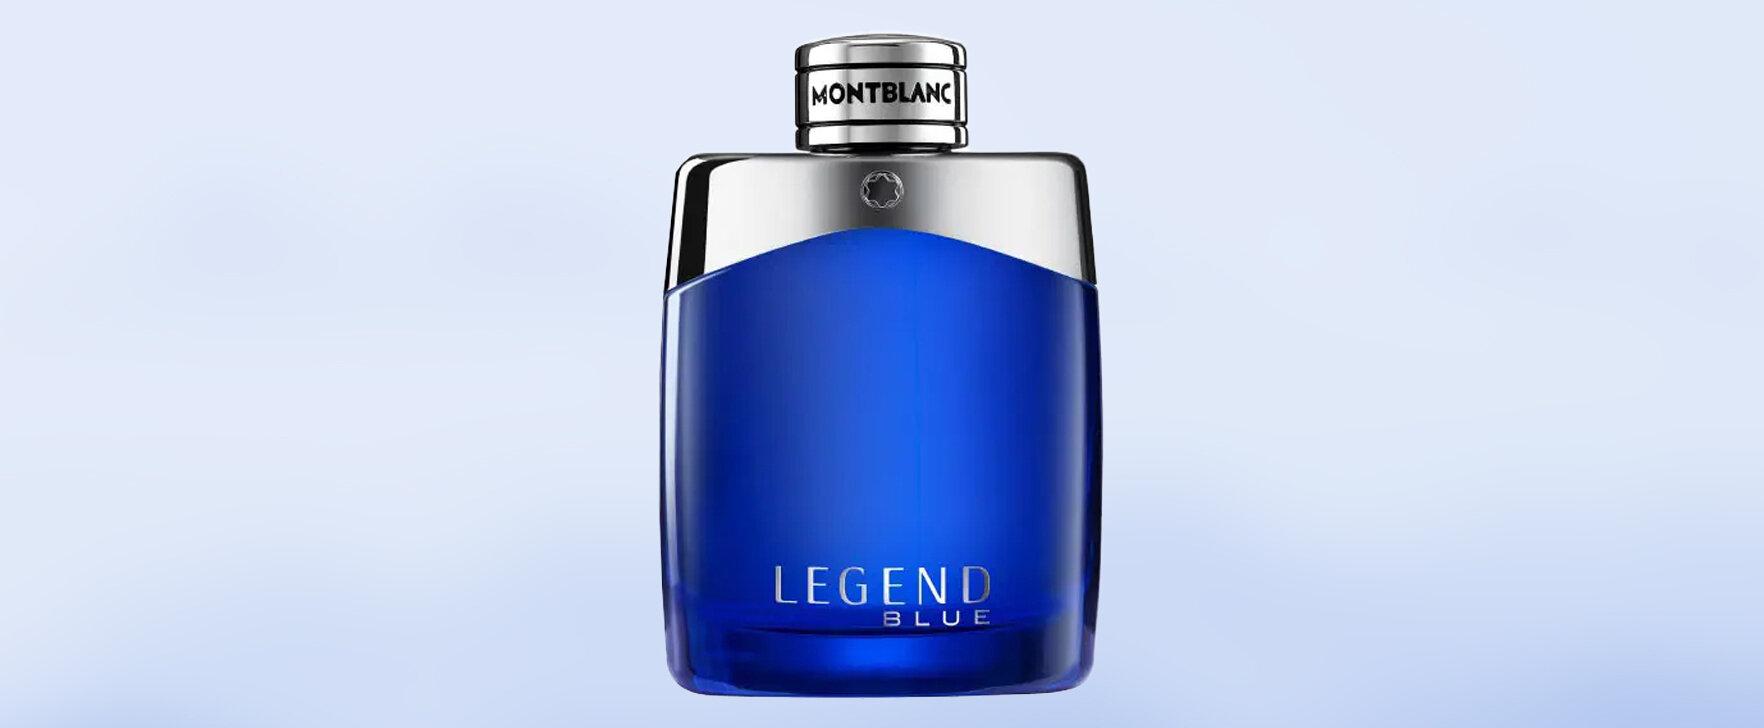 Elegant, Modern and Masculine: The New "Legend Blue" Eau de Parfum From Montblanc